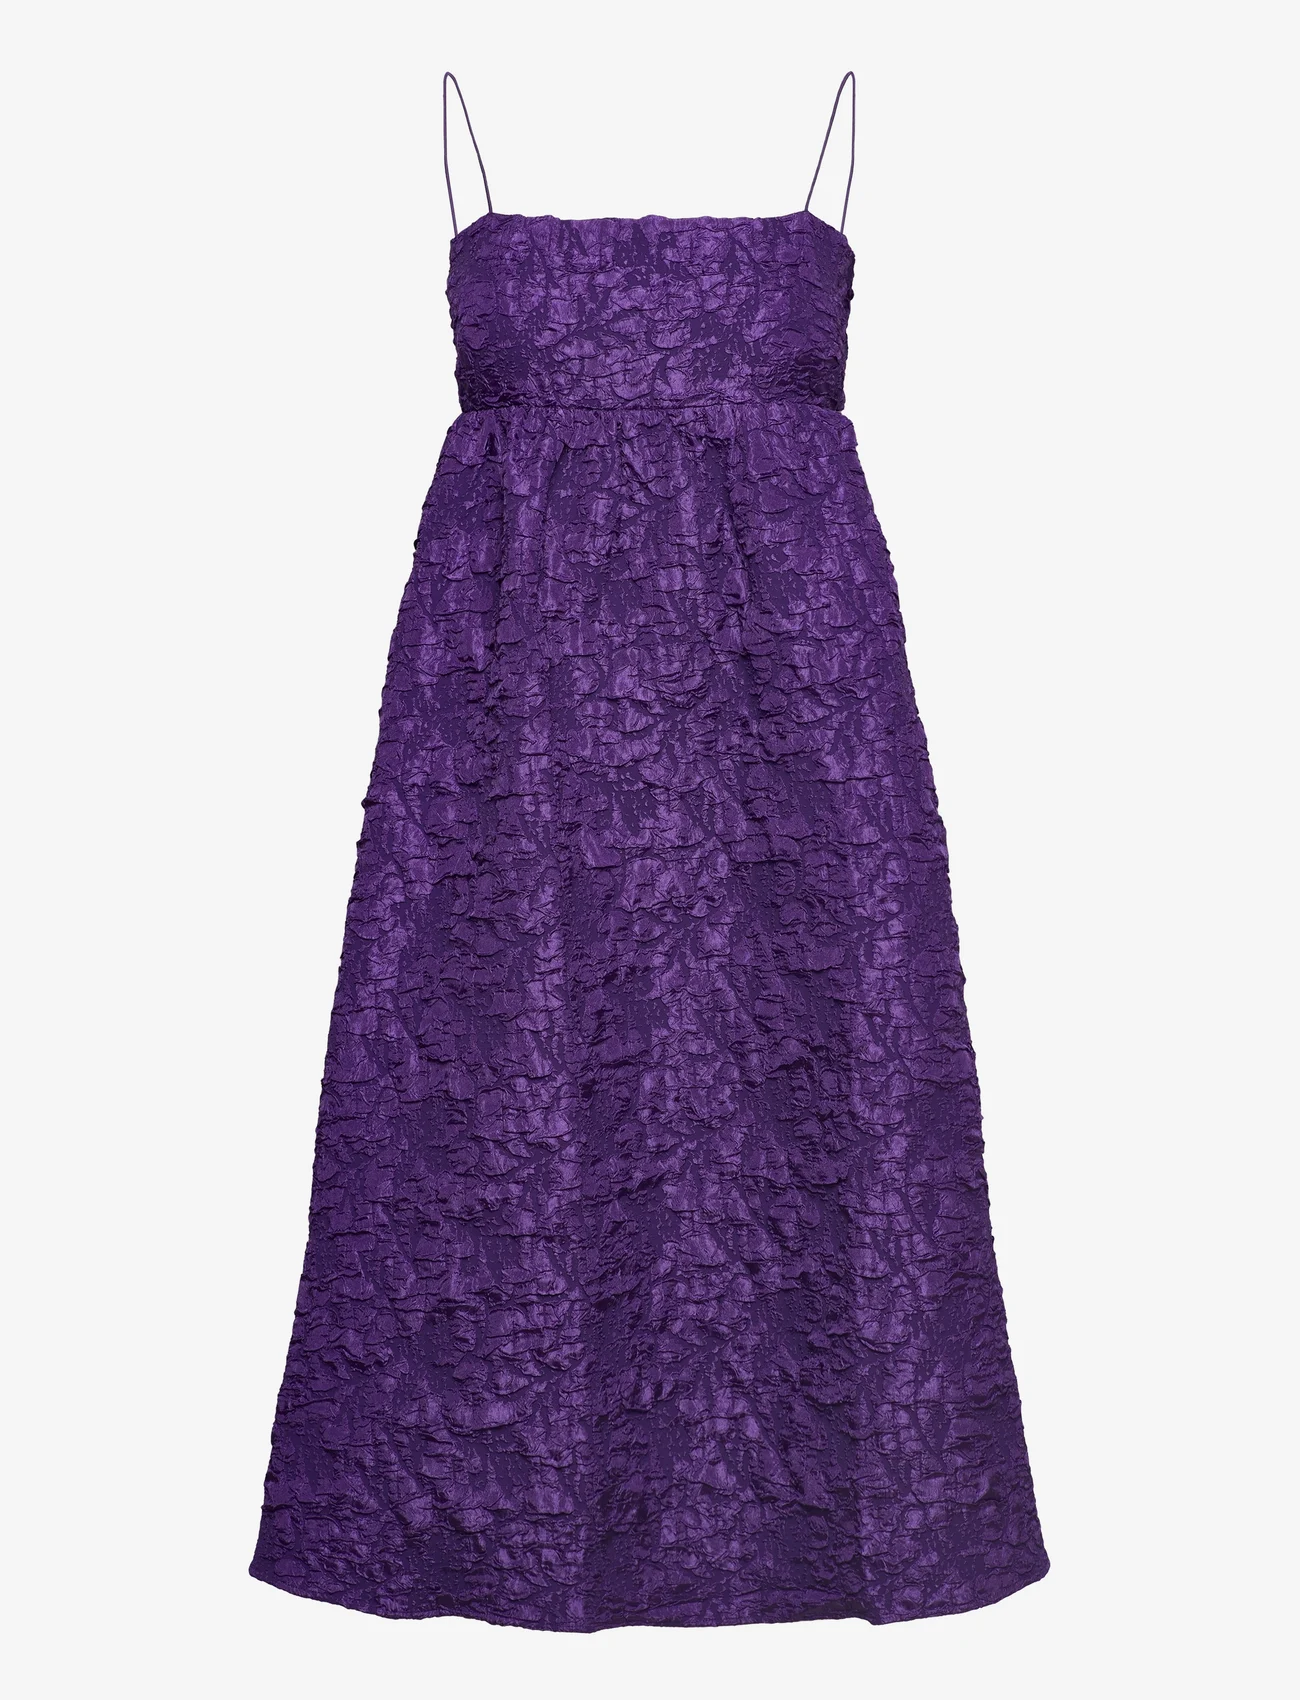 Envii - ENURANUS SL DRESS 7002 - festmode zu outlet-preisen - tillandsia purple - 0